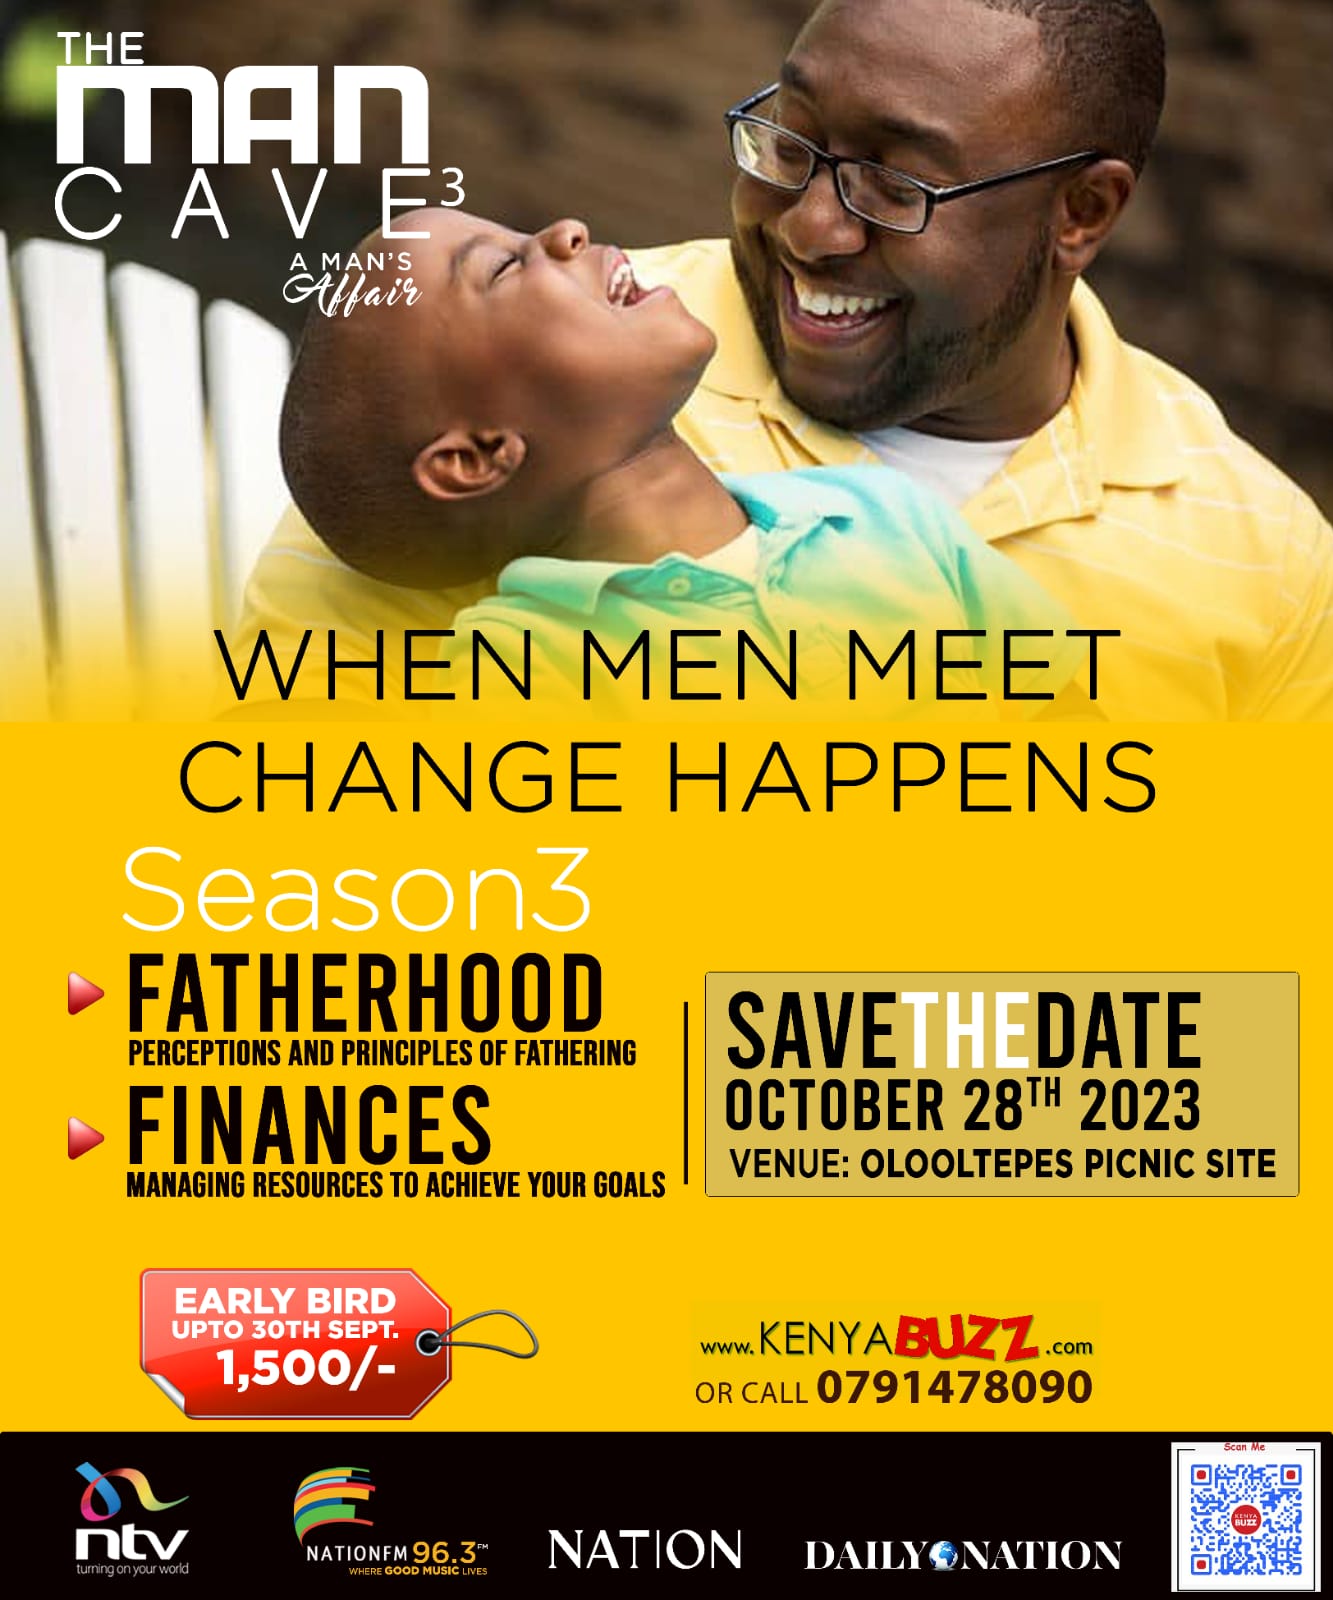 Man Cave's Third Edition: Exploring Fatherhood and Finances